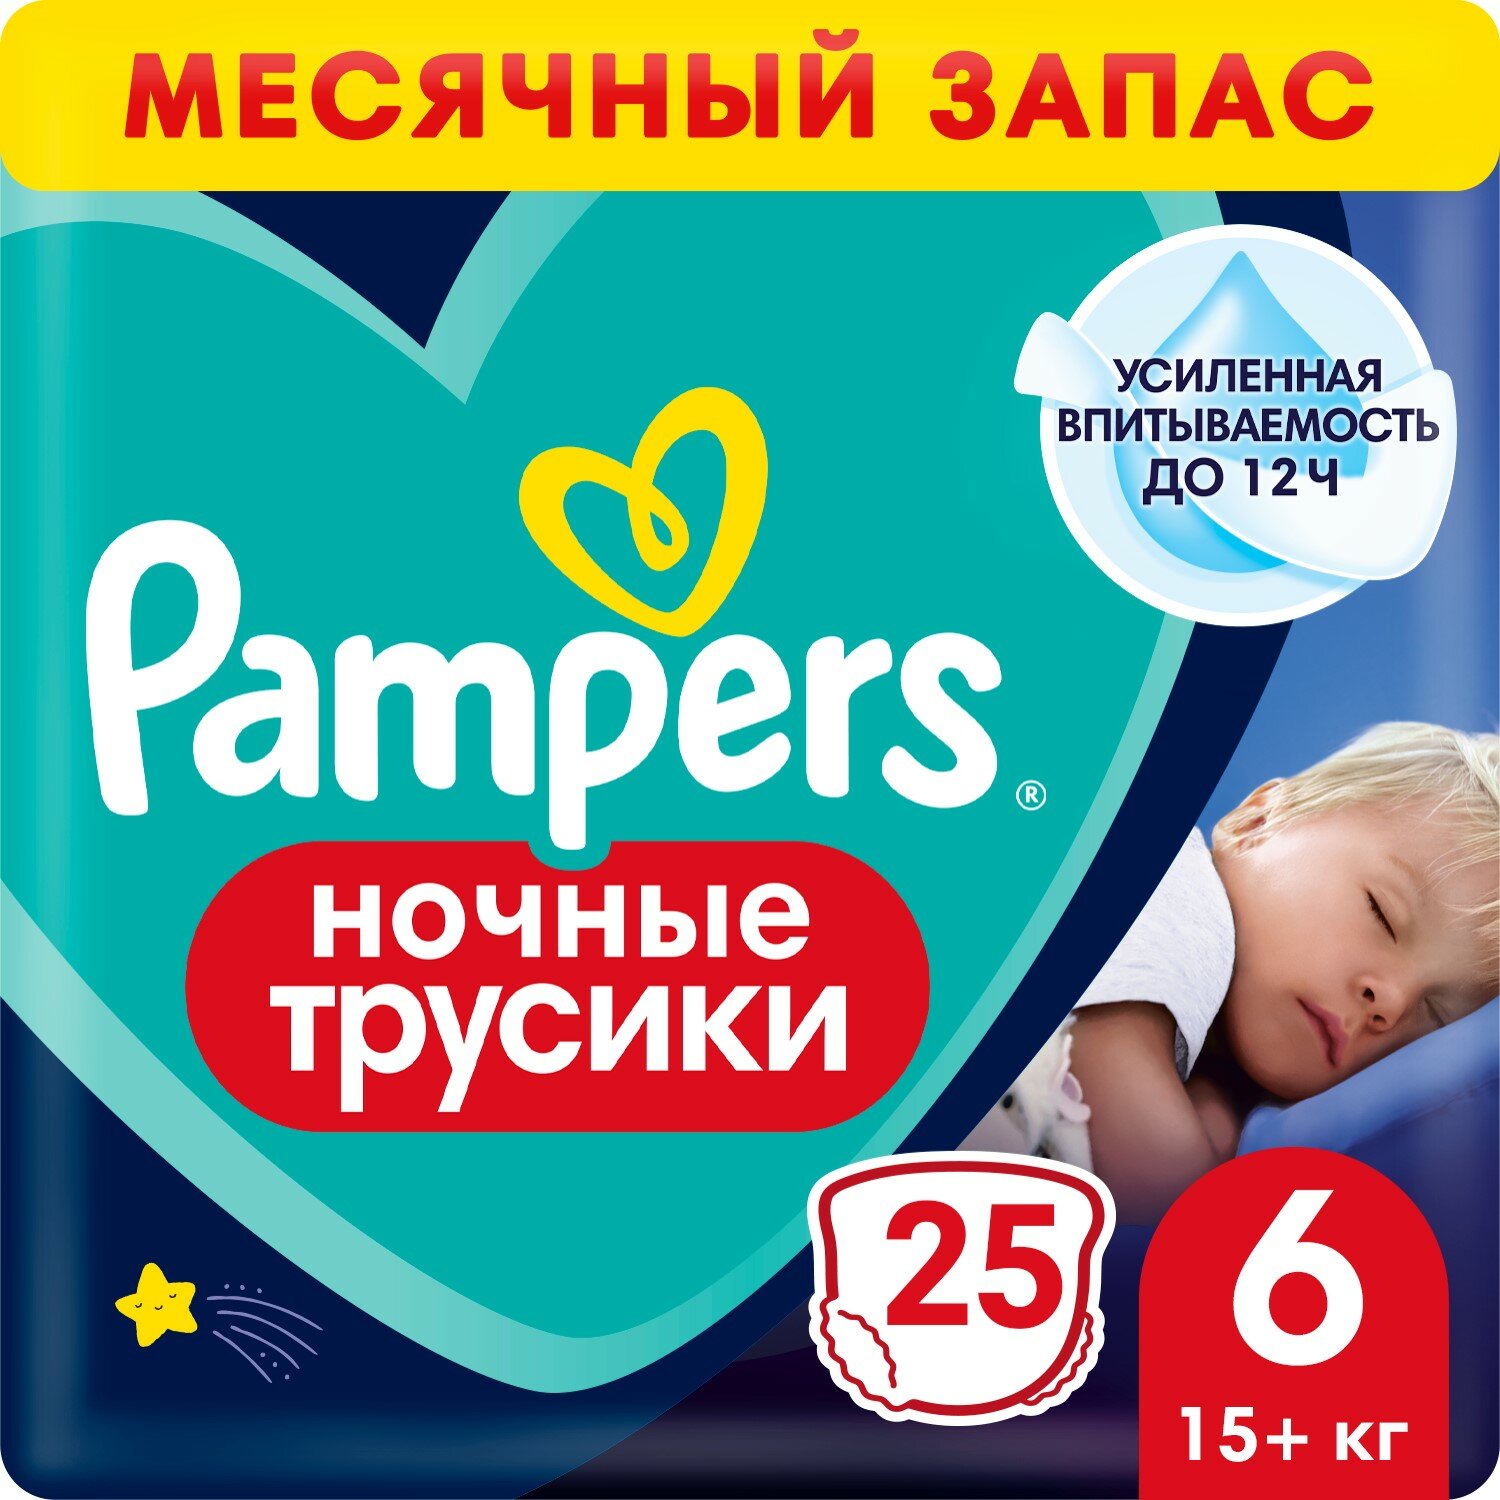 Pampers Night Pants Трусики Размер 6, 25 шт, 15кг+